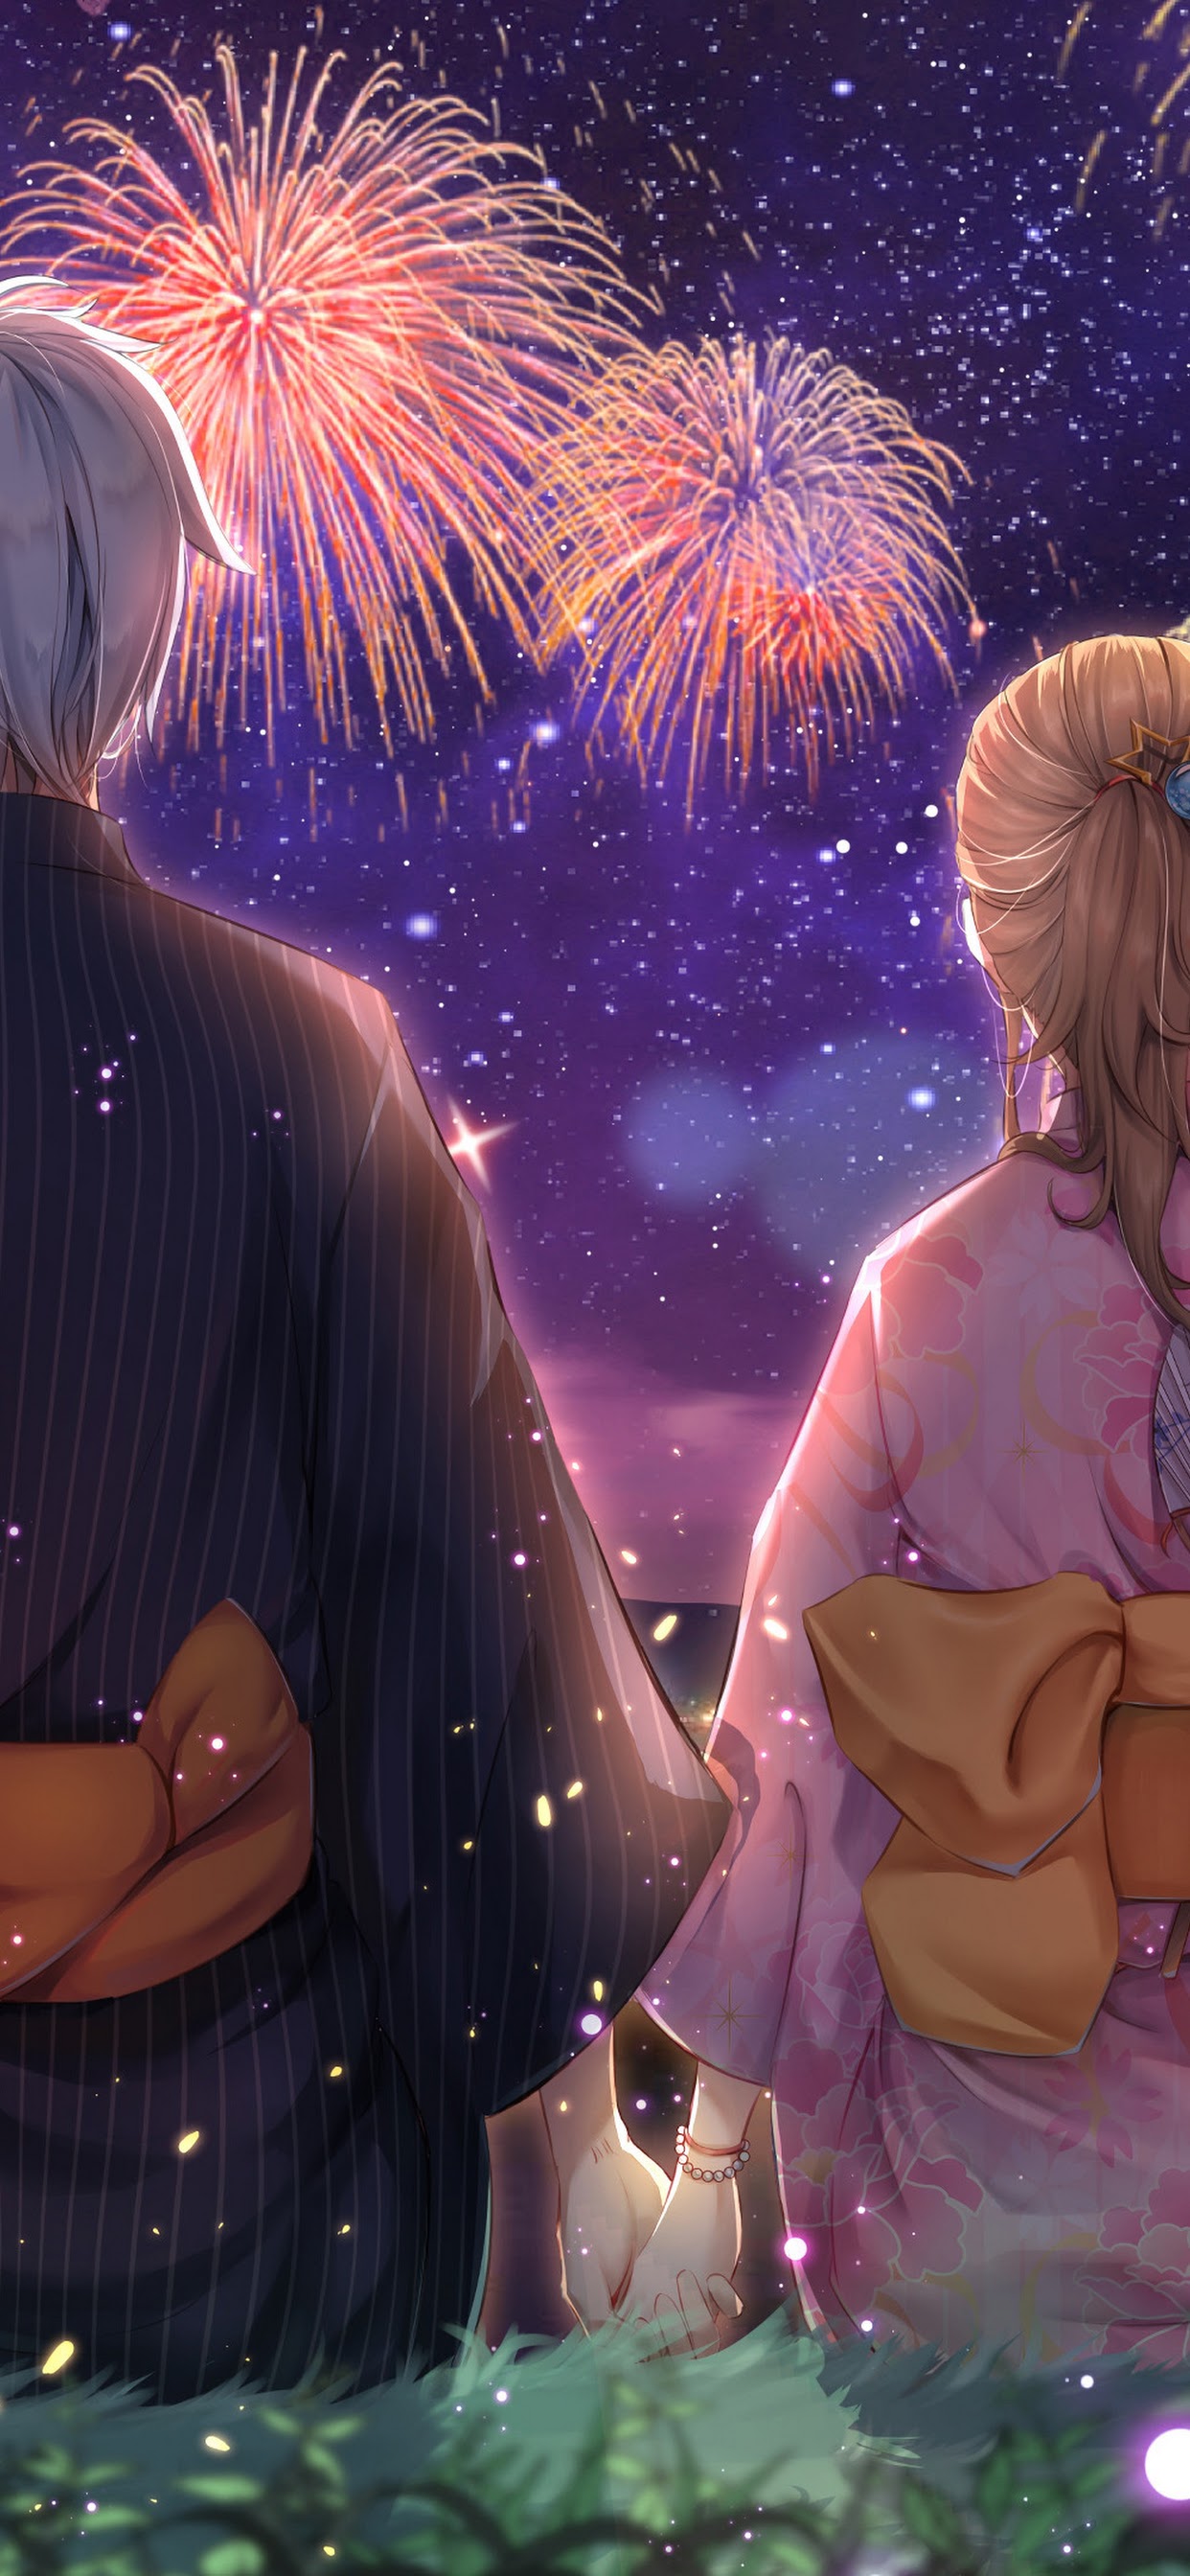 Anime, Couple, Fireworks, Kimono, 4k, - End Of An Era By Really Slow Motion  - 1242x2688 Wallpaper 